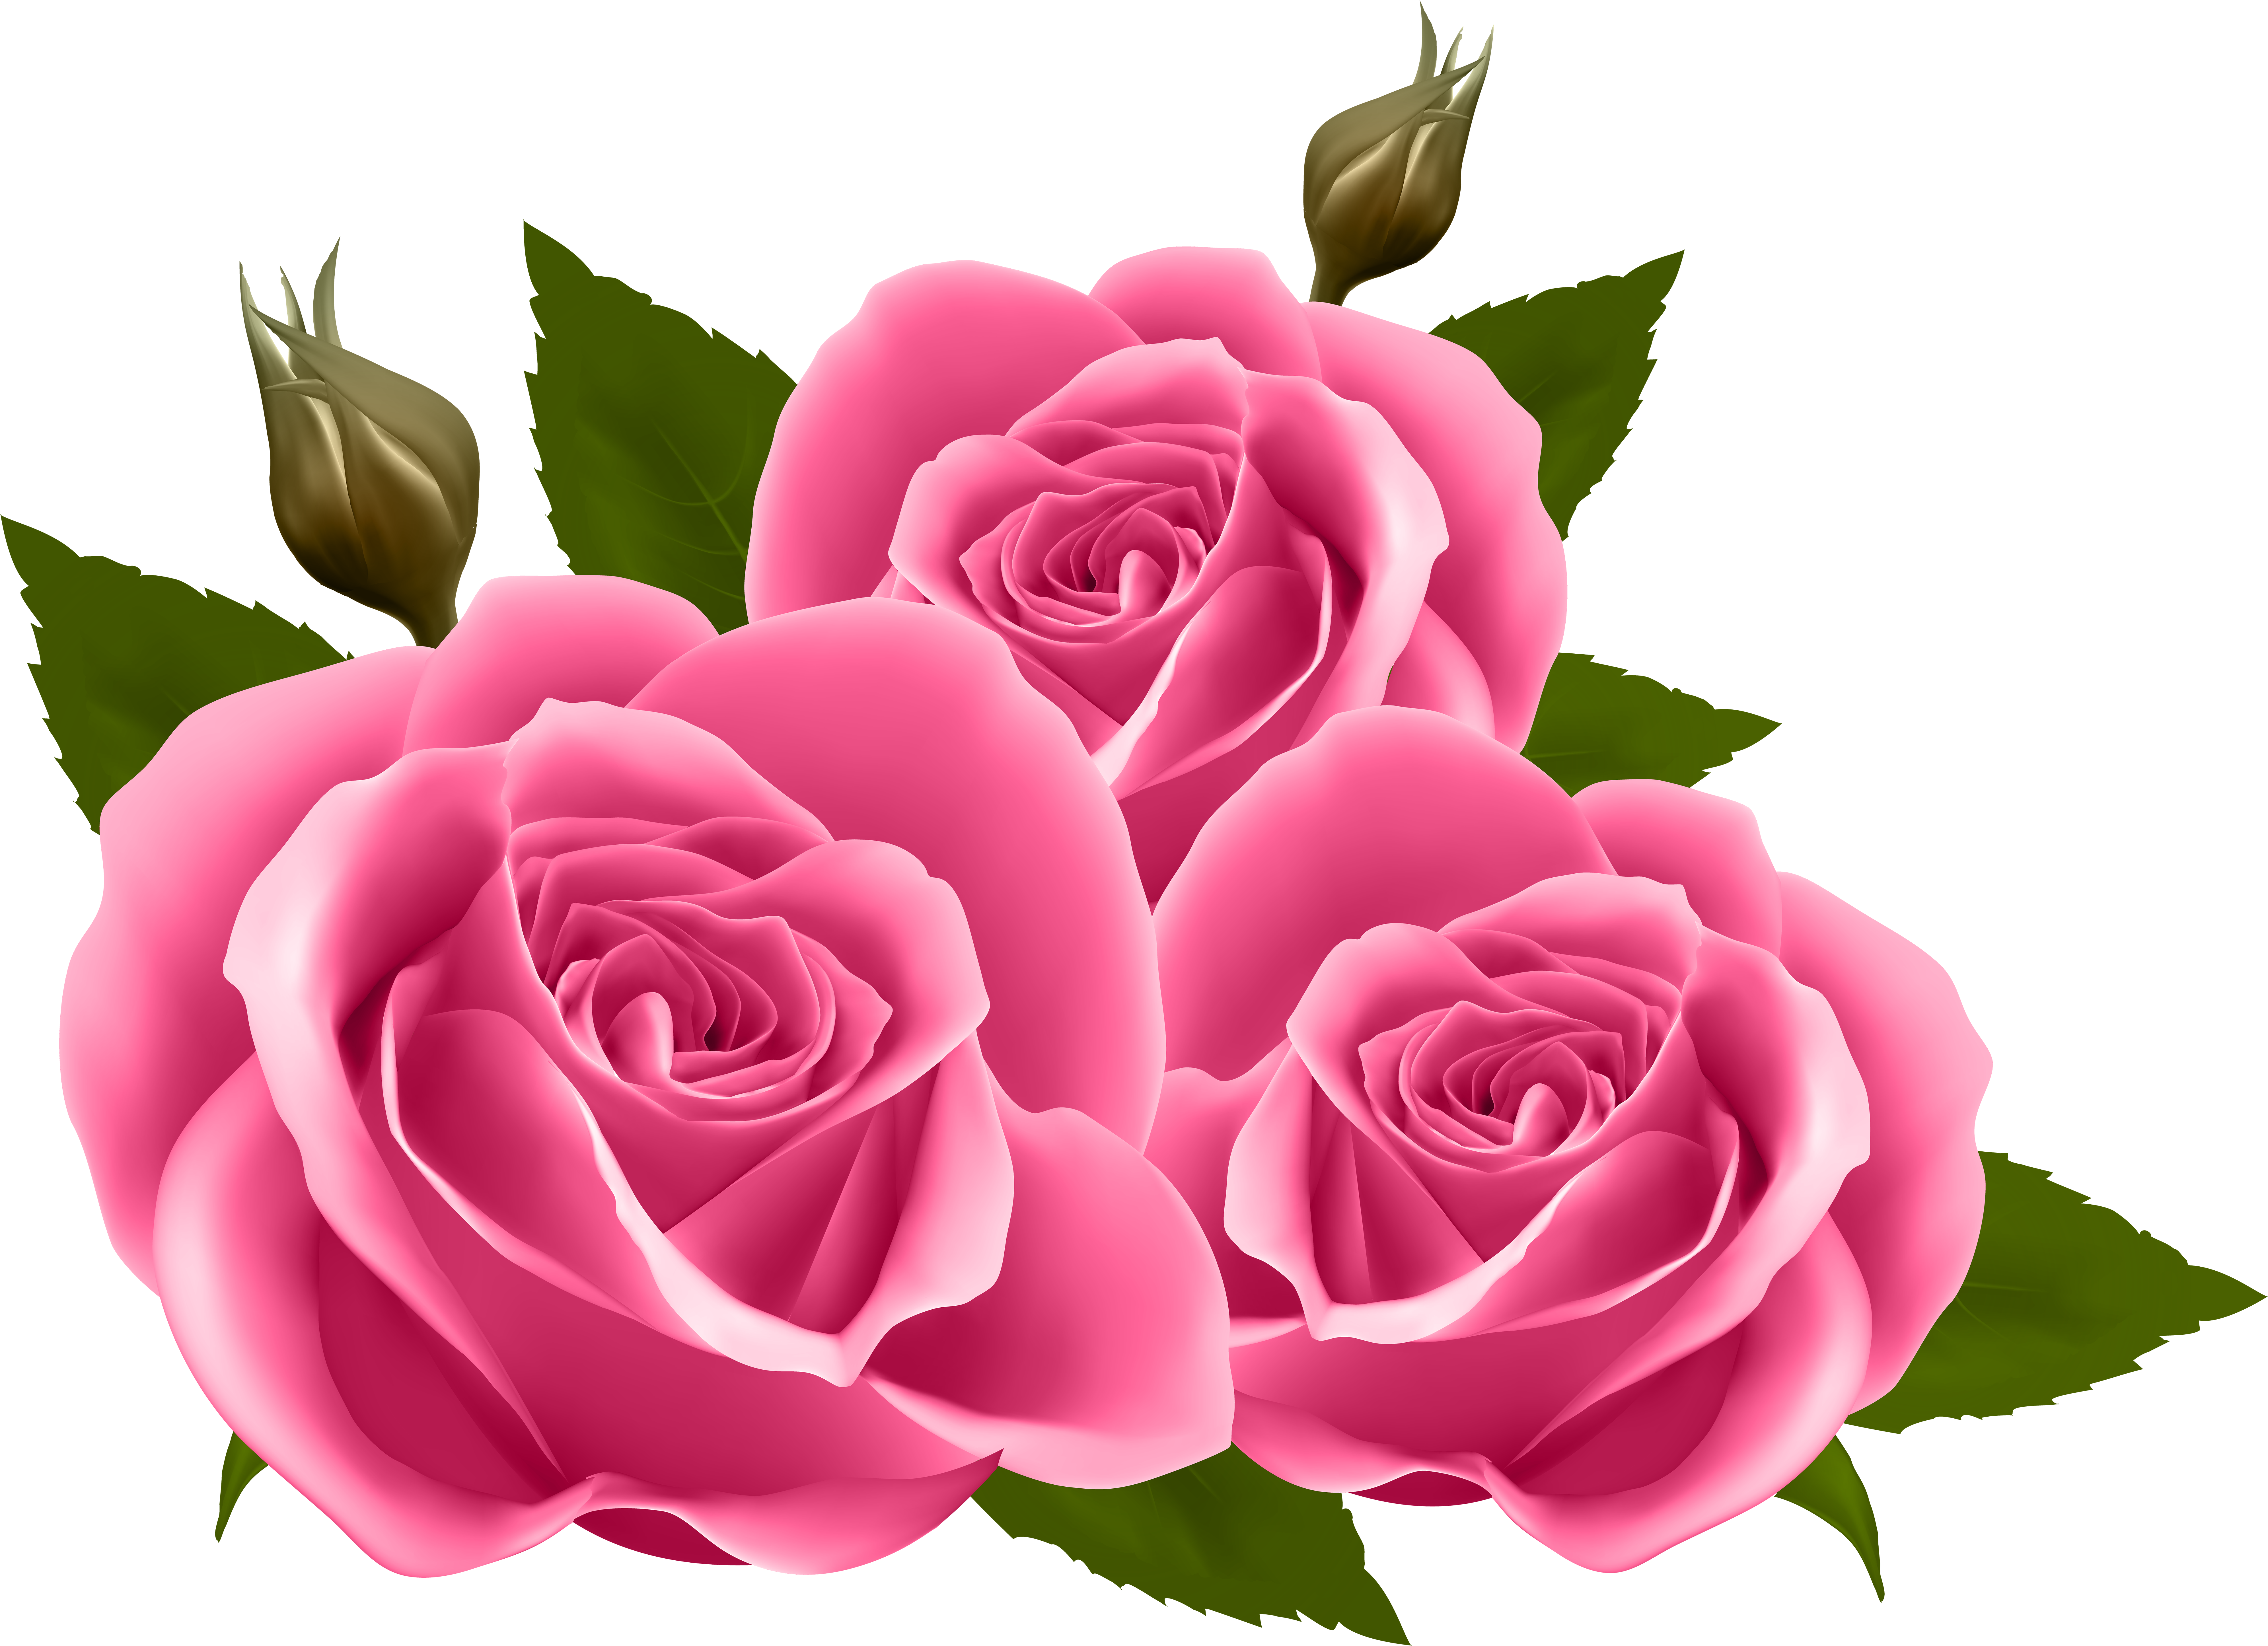 Rose clipart garden rose, Rose garden rose Transparent FREE for